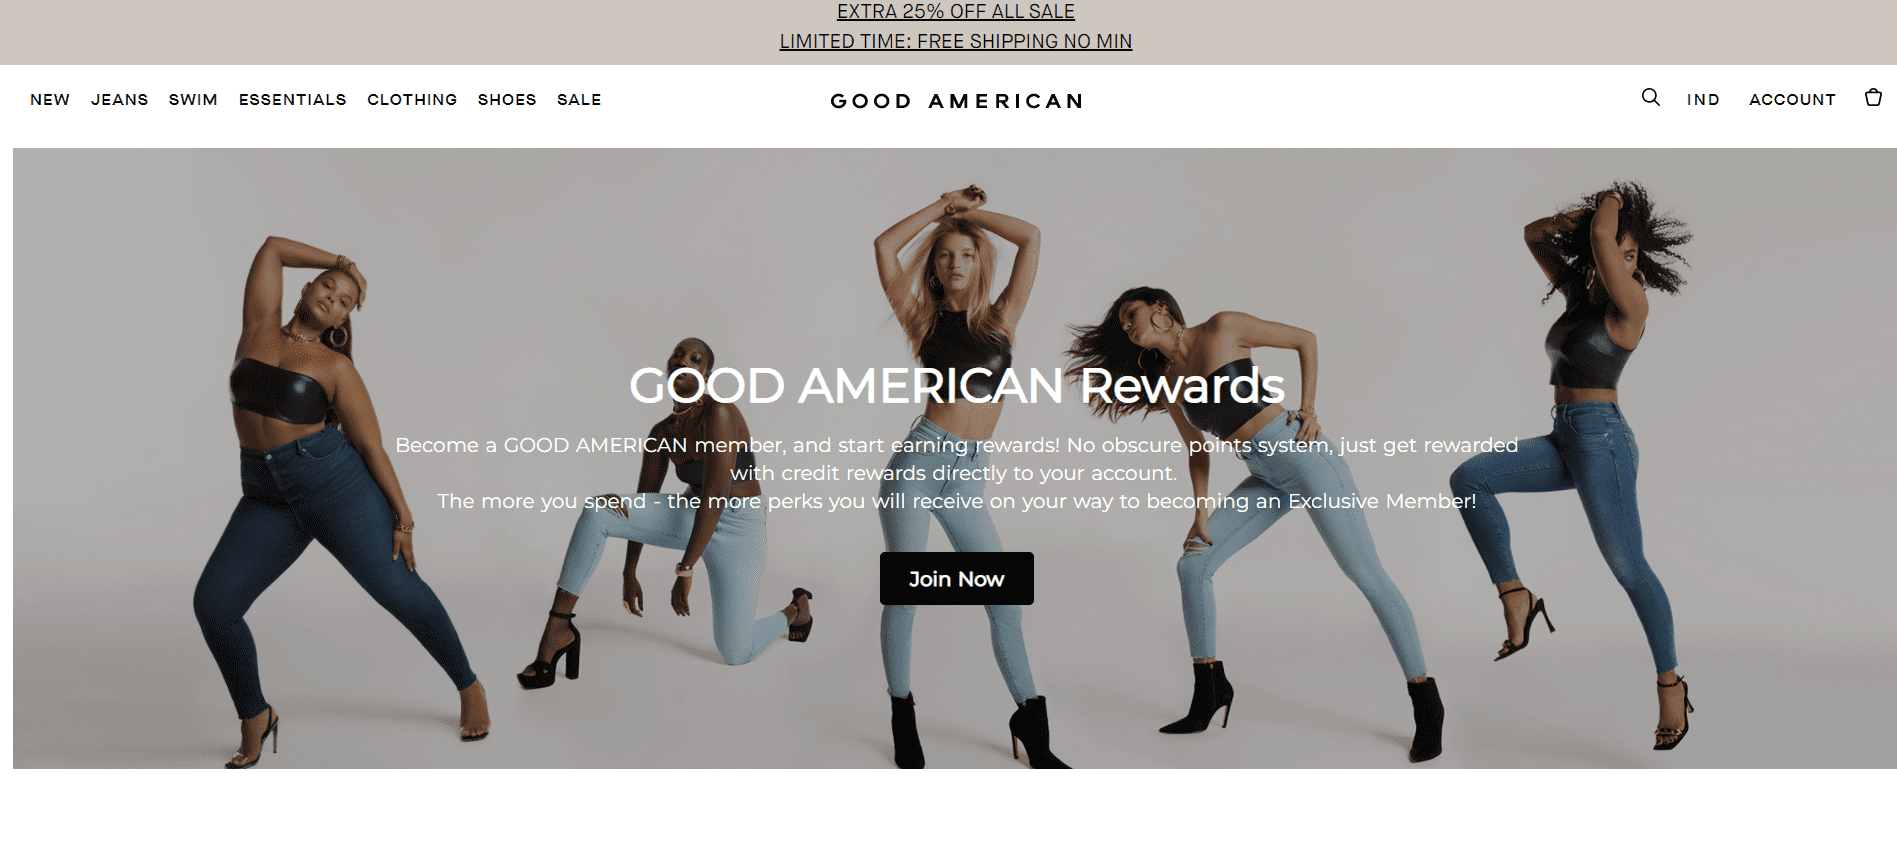 Fashion brand Good American